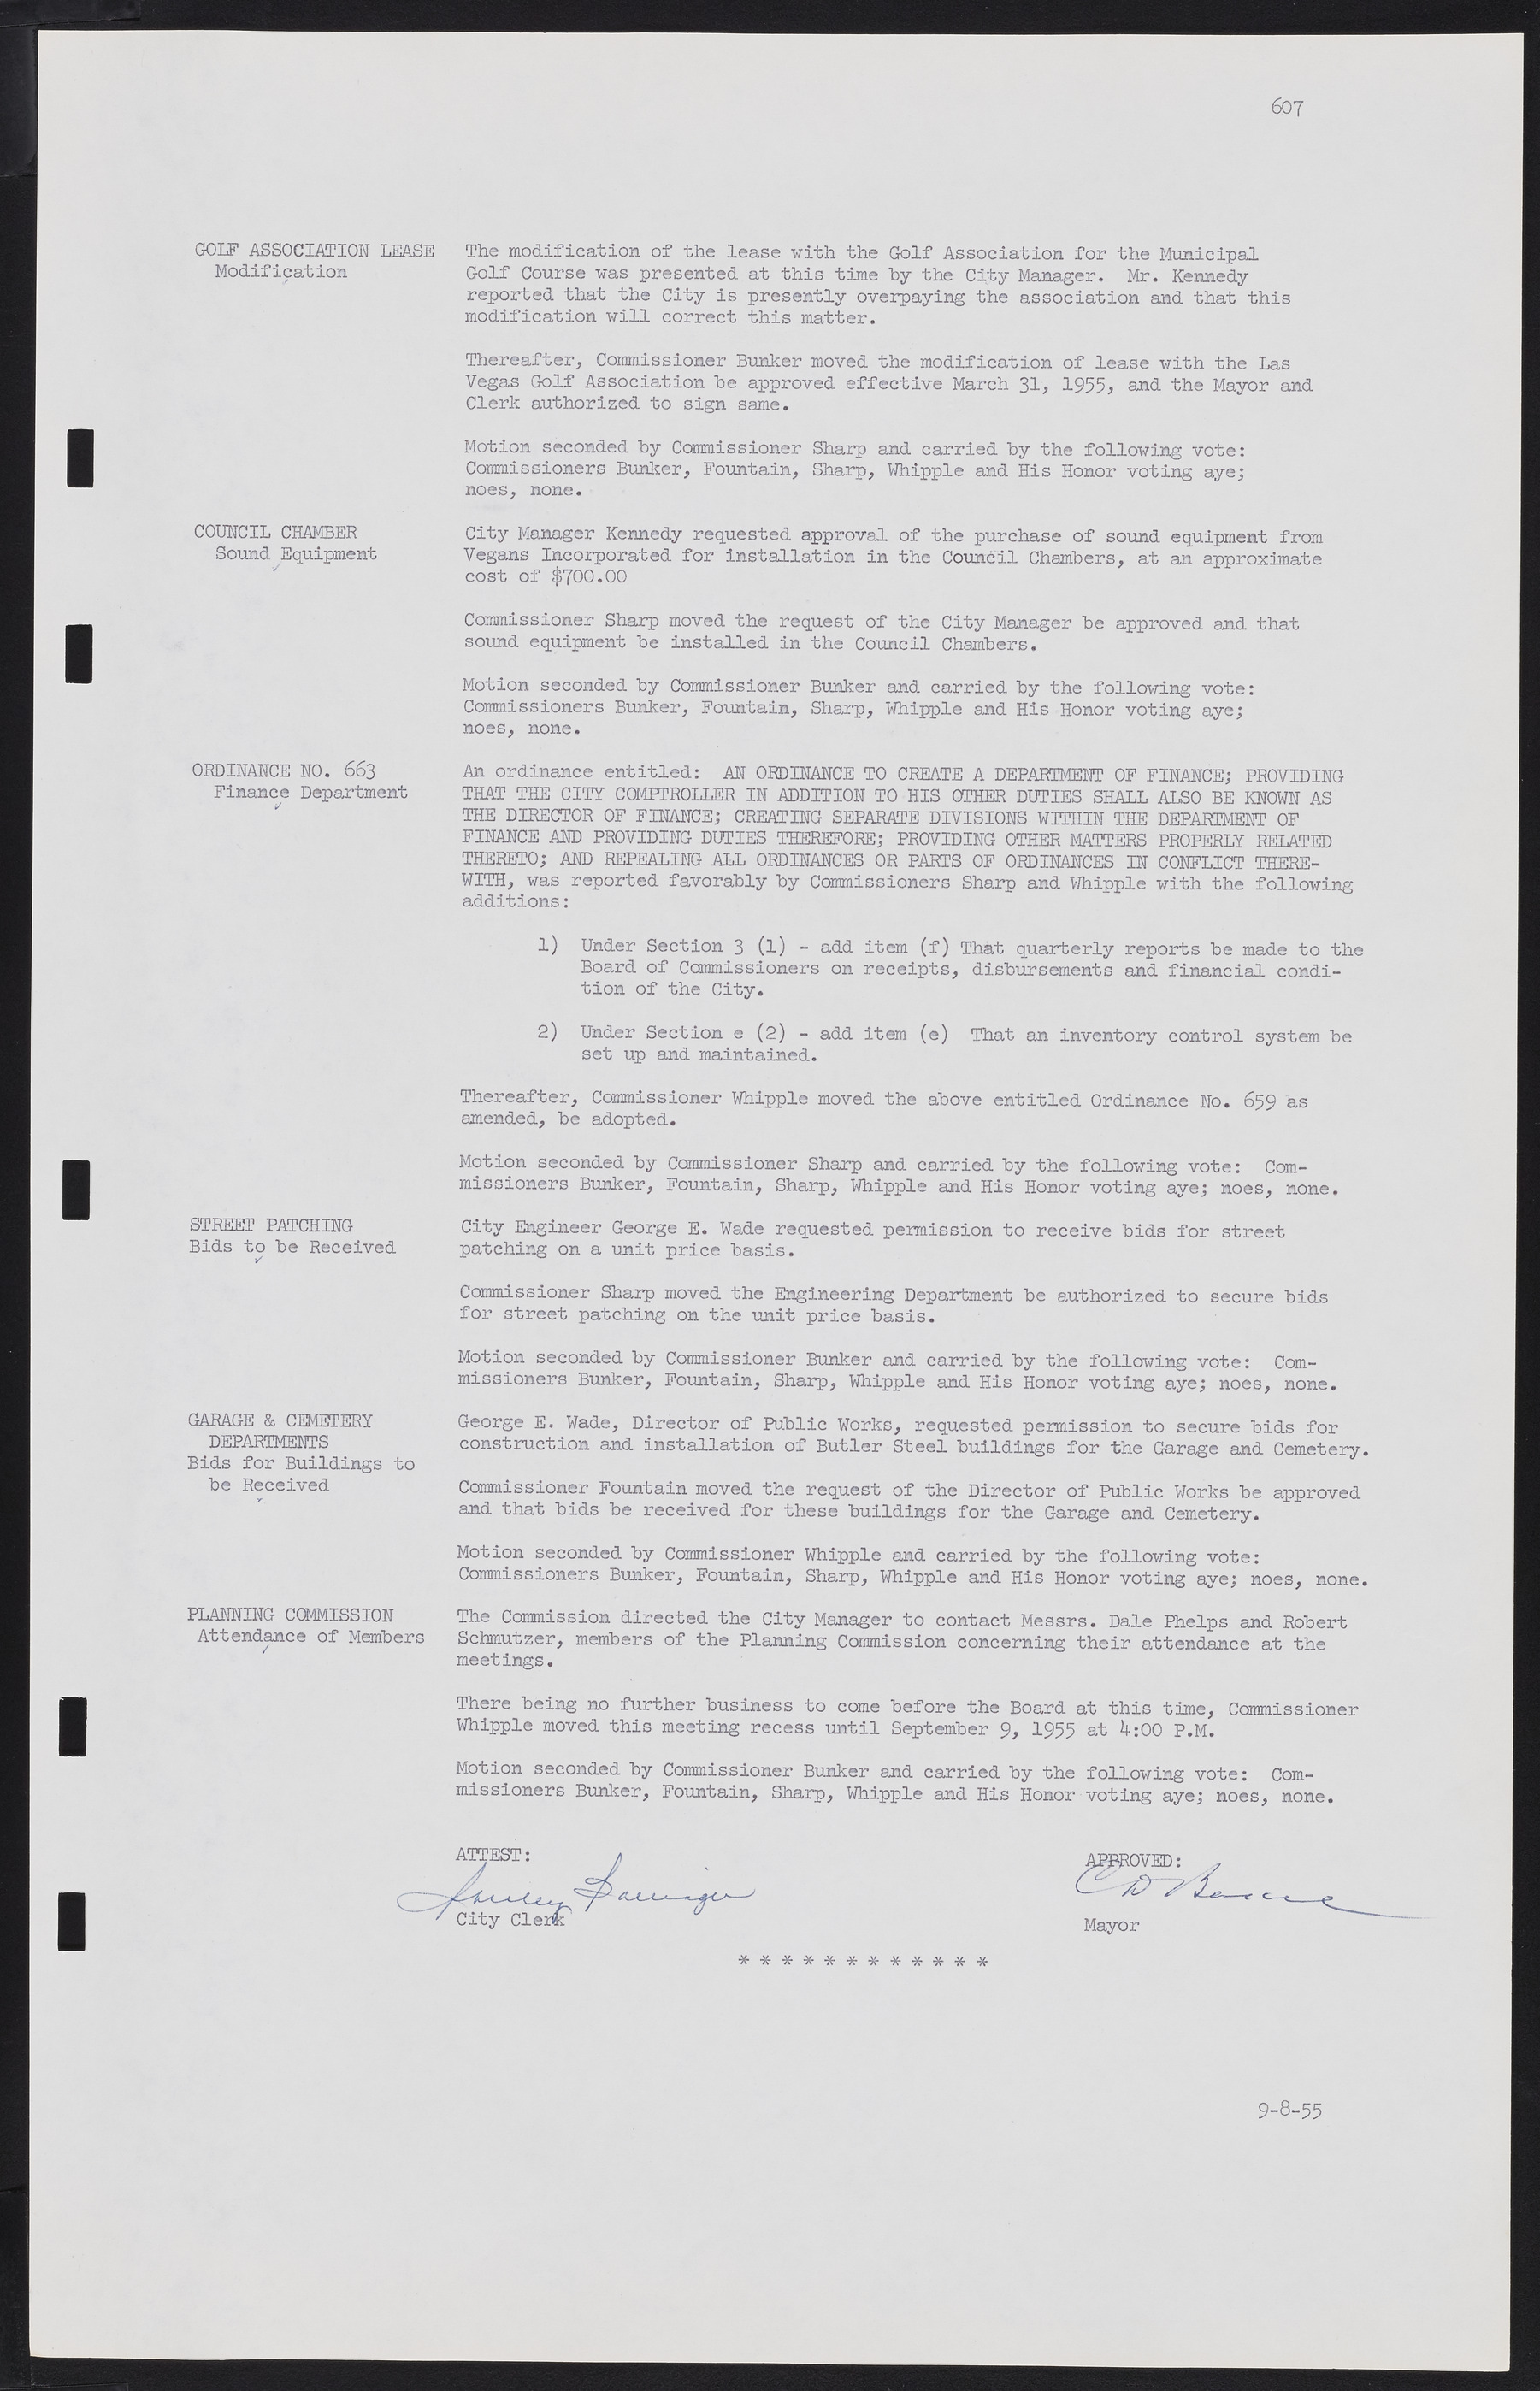 Las Vegas City Commission Minutes, February 17, 1954 to September 21, 1955, lvc000009-613